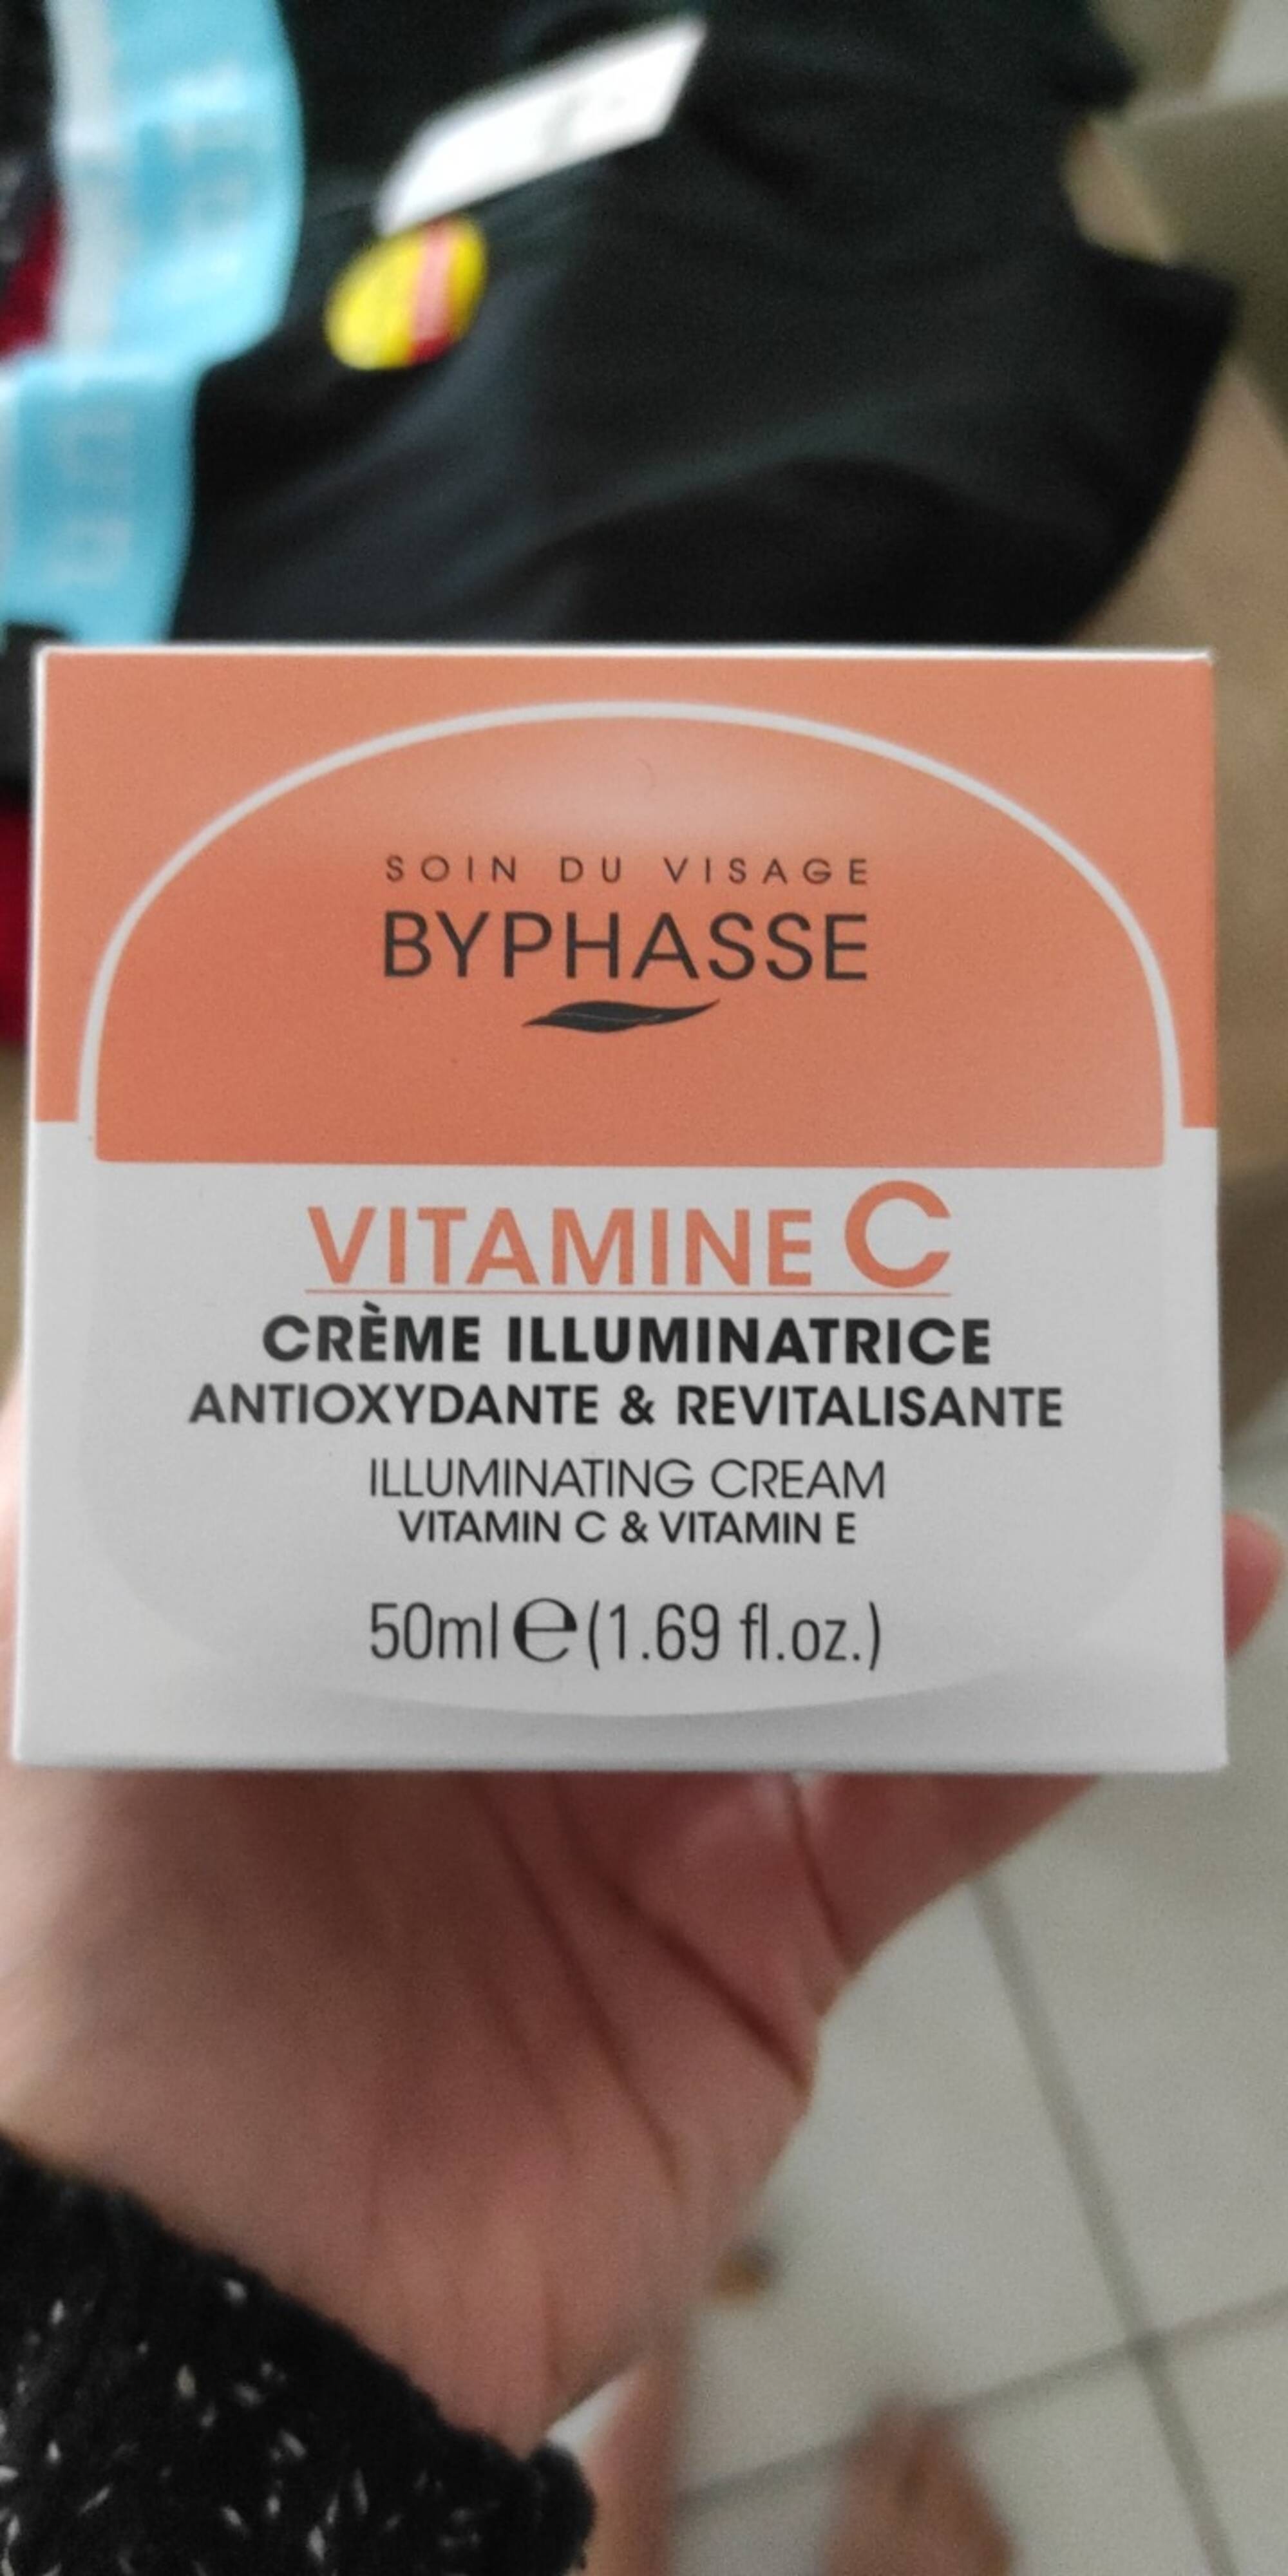 BYPHASSE - Vitamine C - Crème illuminatrice